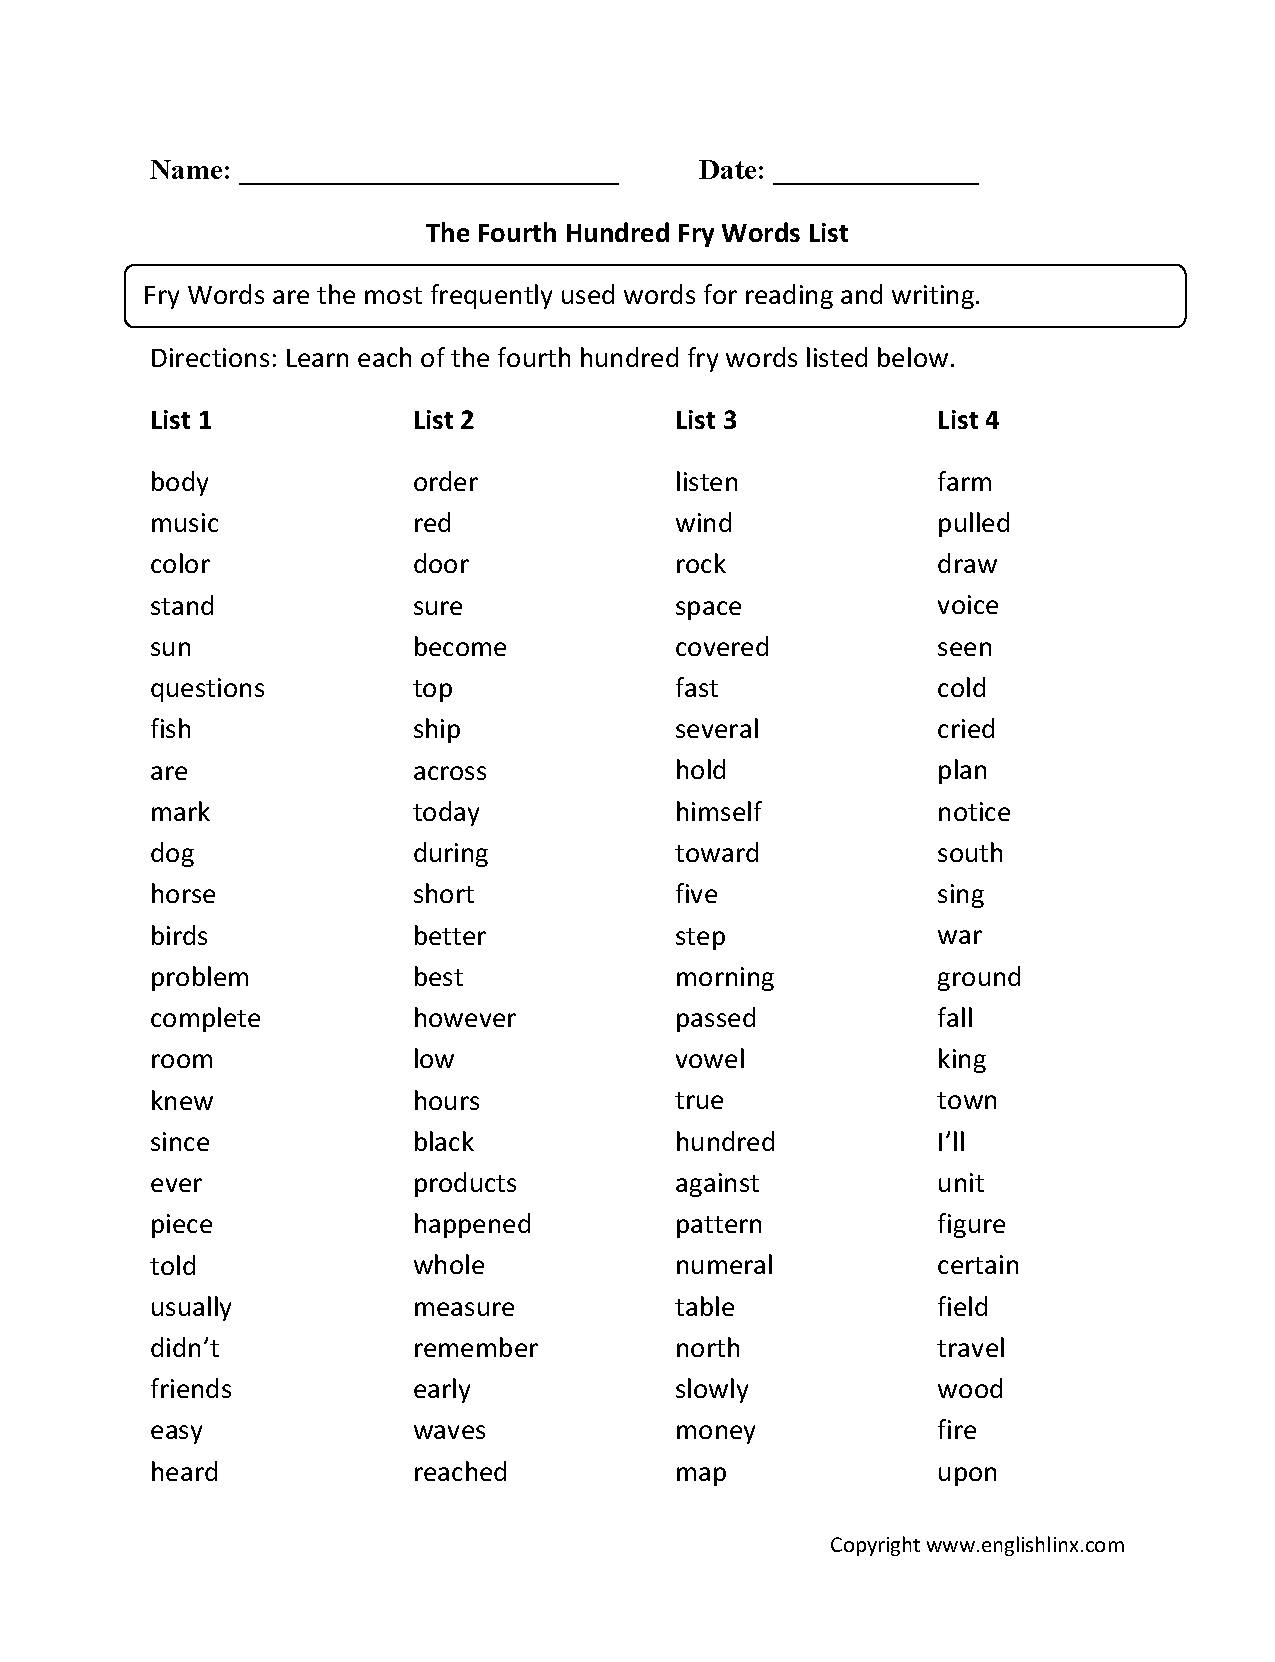 Fourth Hundred Fry Words List Worksheets